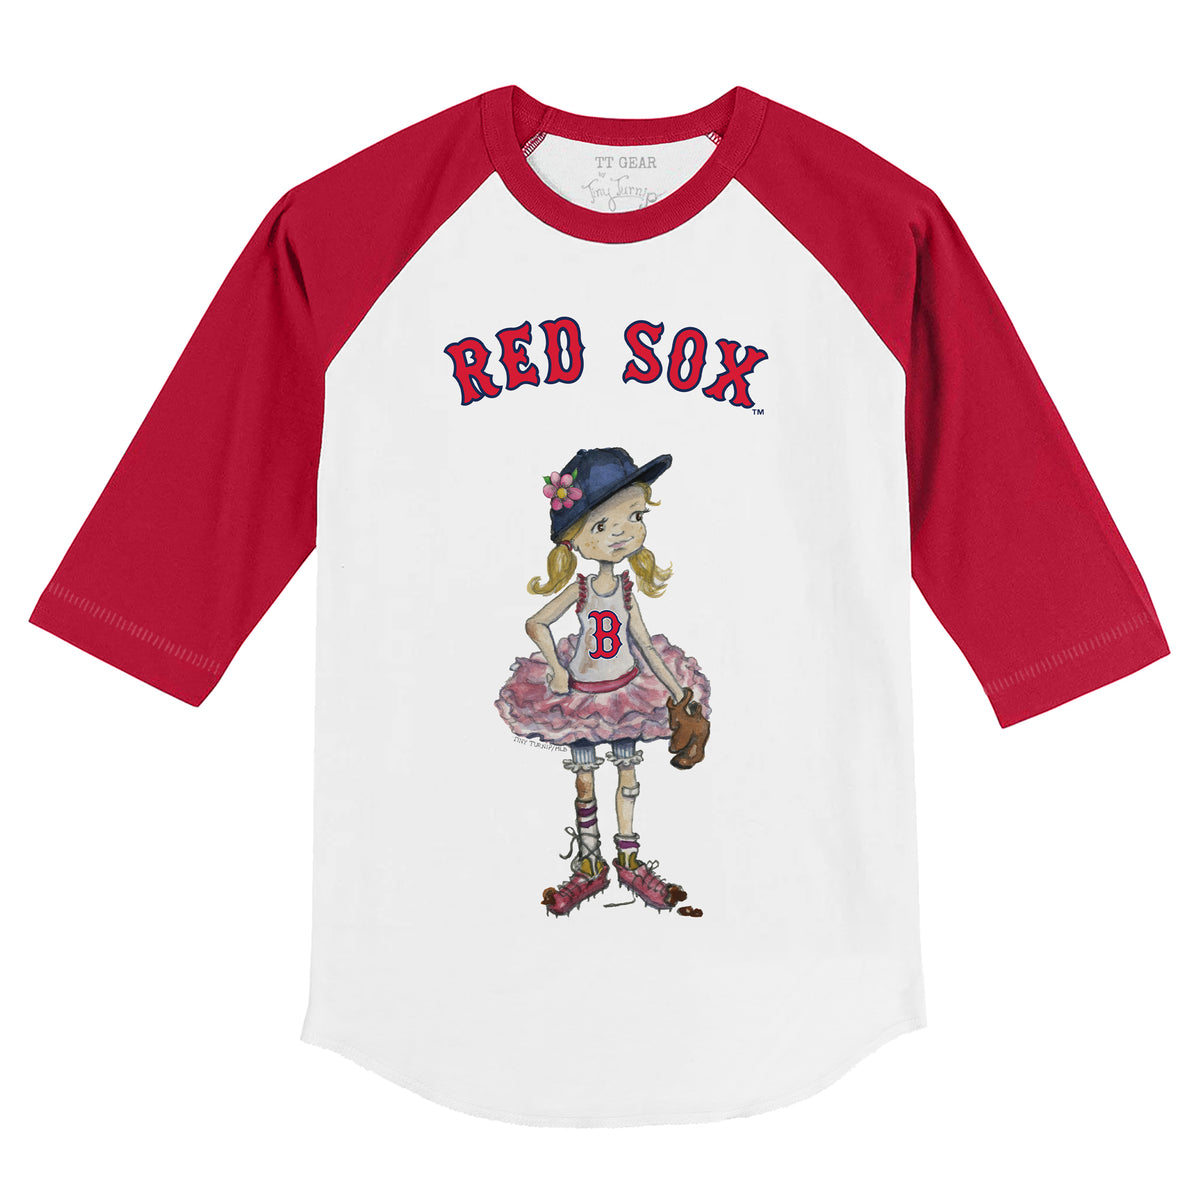 Boston Red Sox Babes 3/4 Red Sleeve Raglan